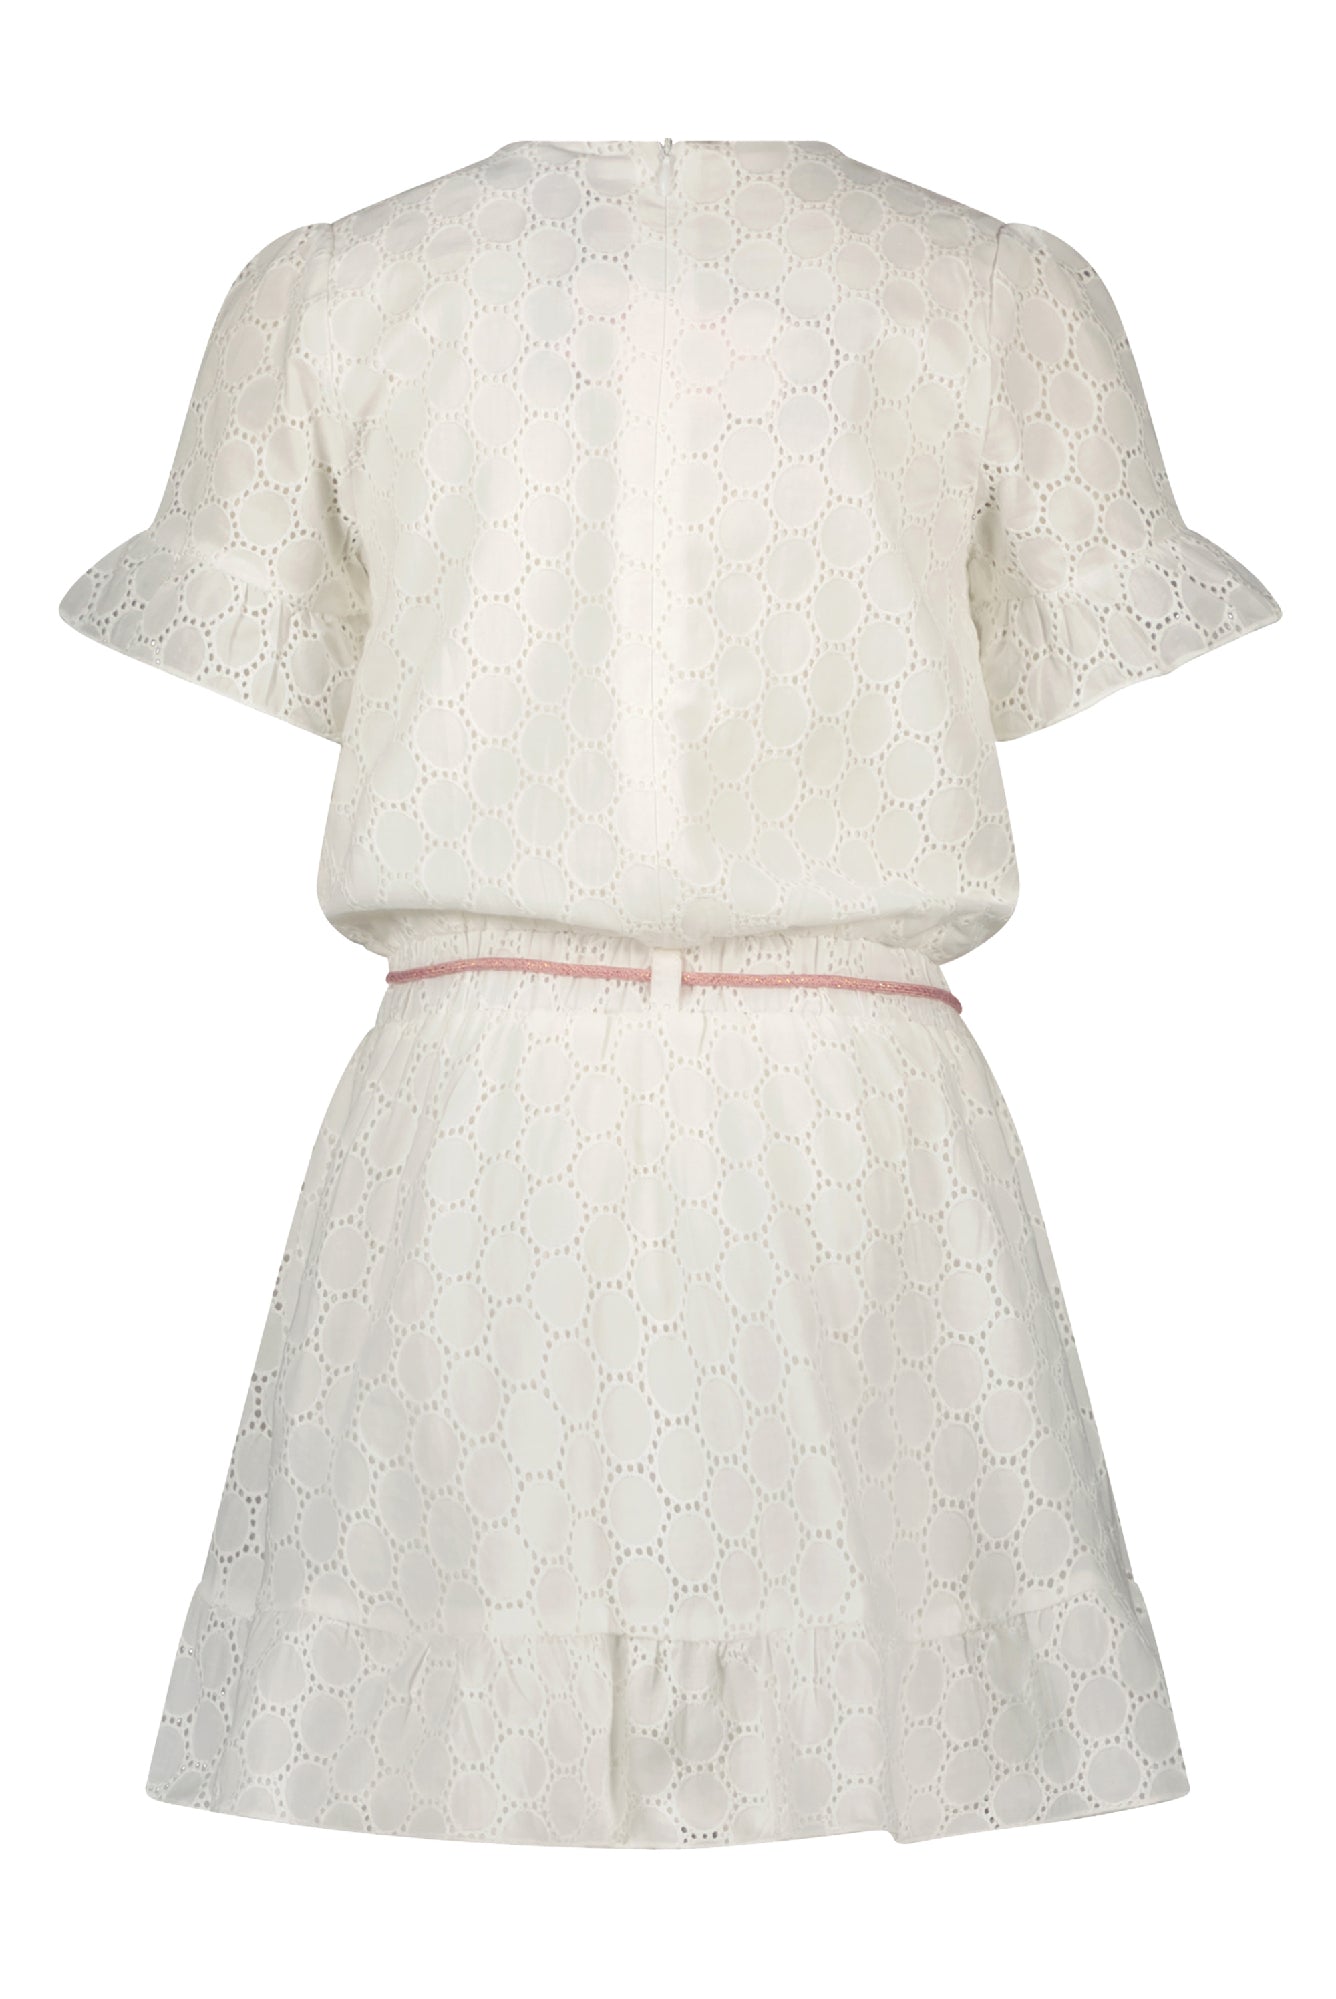 Meisjes Mirabel embroidered dress half sleeve van NoNo in de kleur Pearled Ivory in maat 134-140.